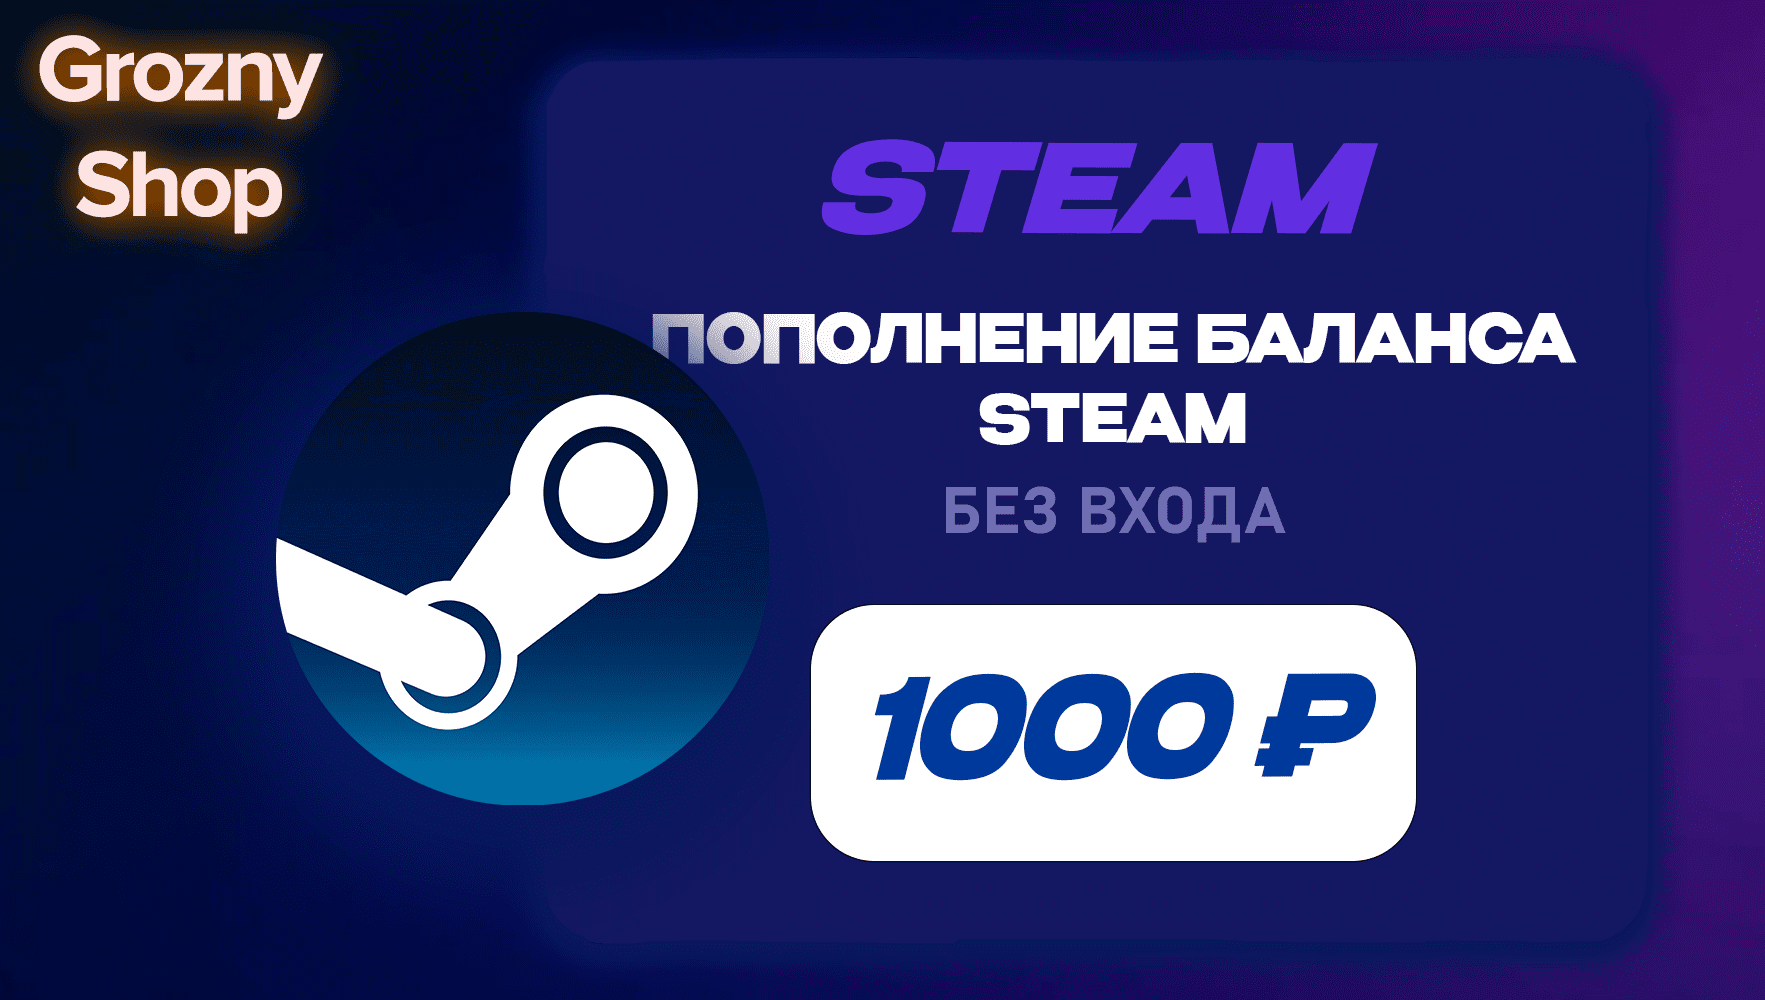 1000 рублей на аккаунт Steam - фото